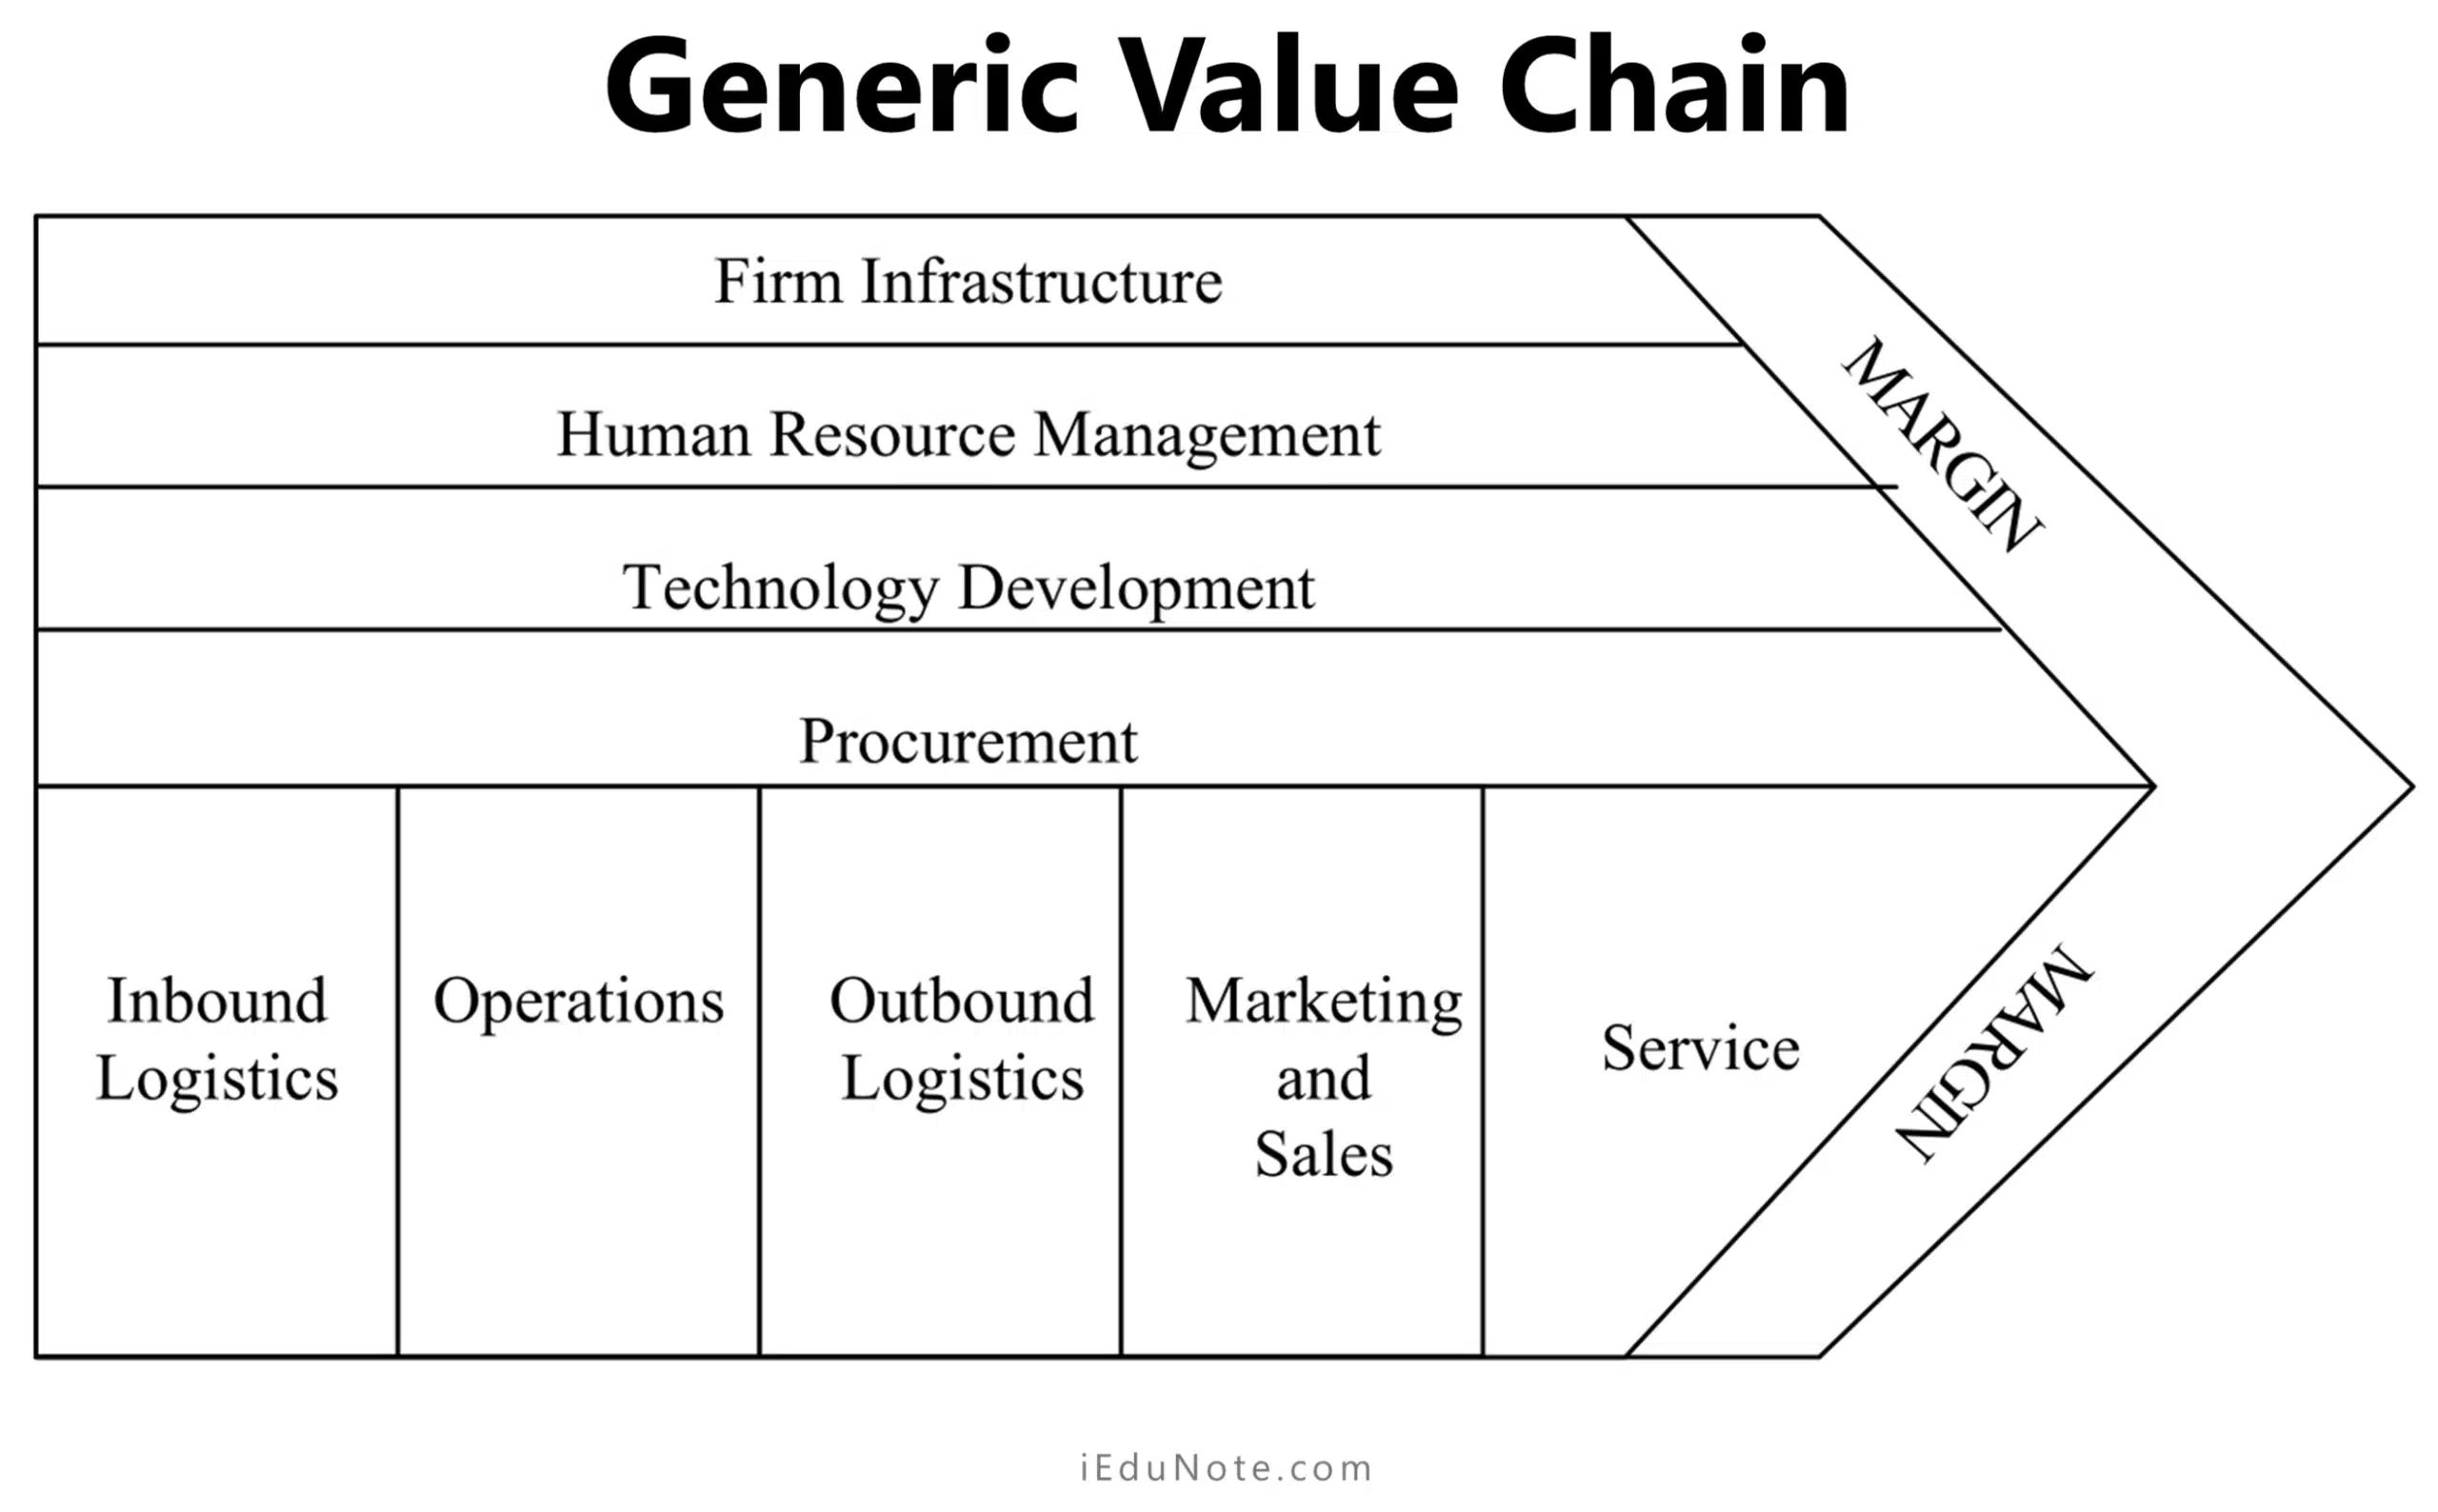 Exploring Strategic Opportunities in the Customer Value Chain (CVC)